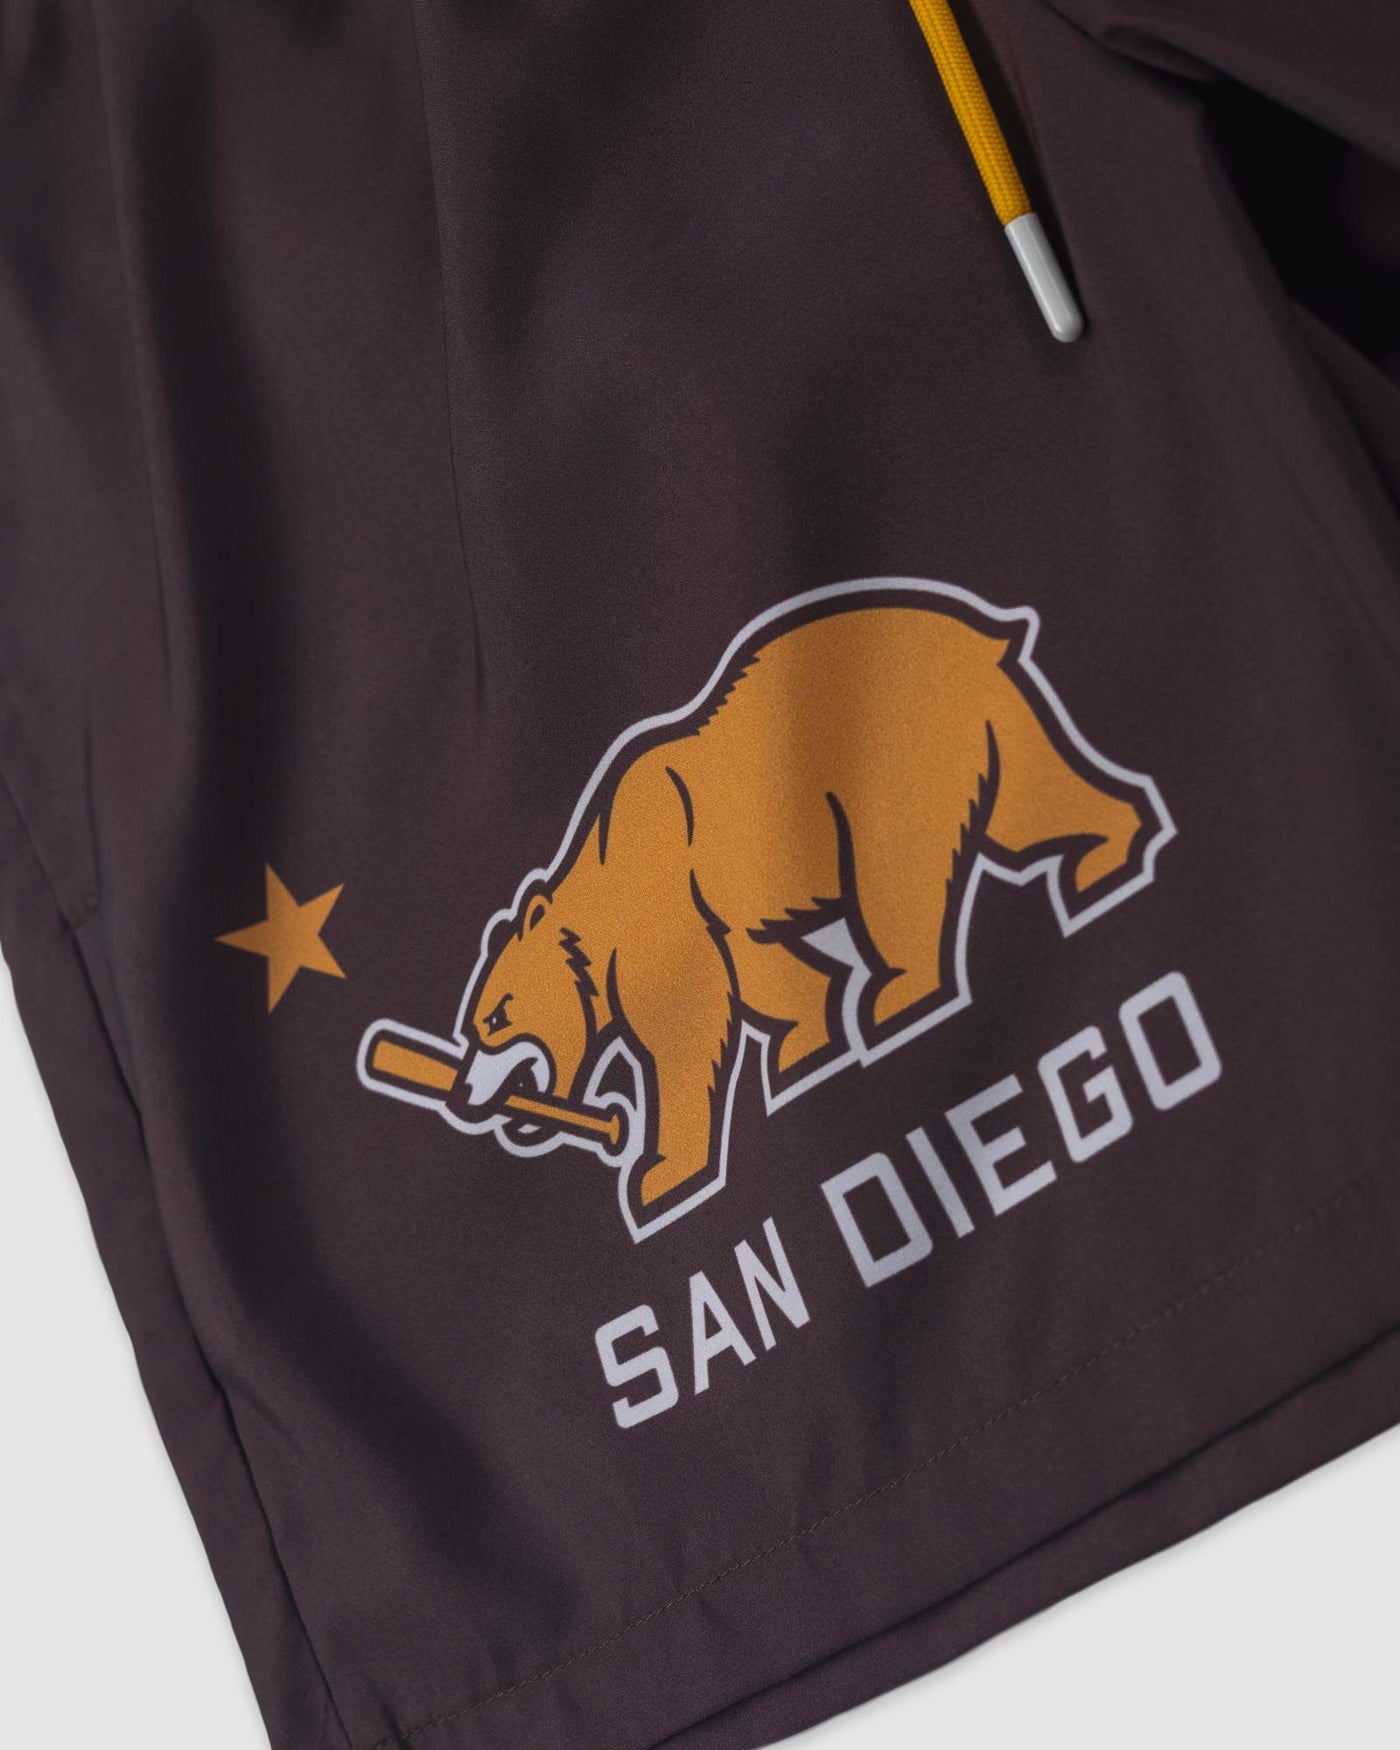 Cali Bear Trunks - Padres de San Diego 